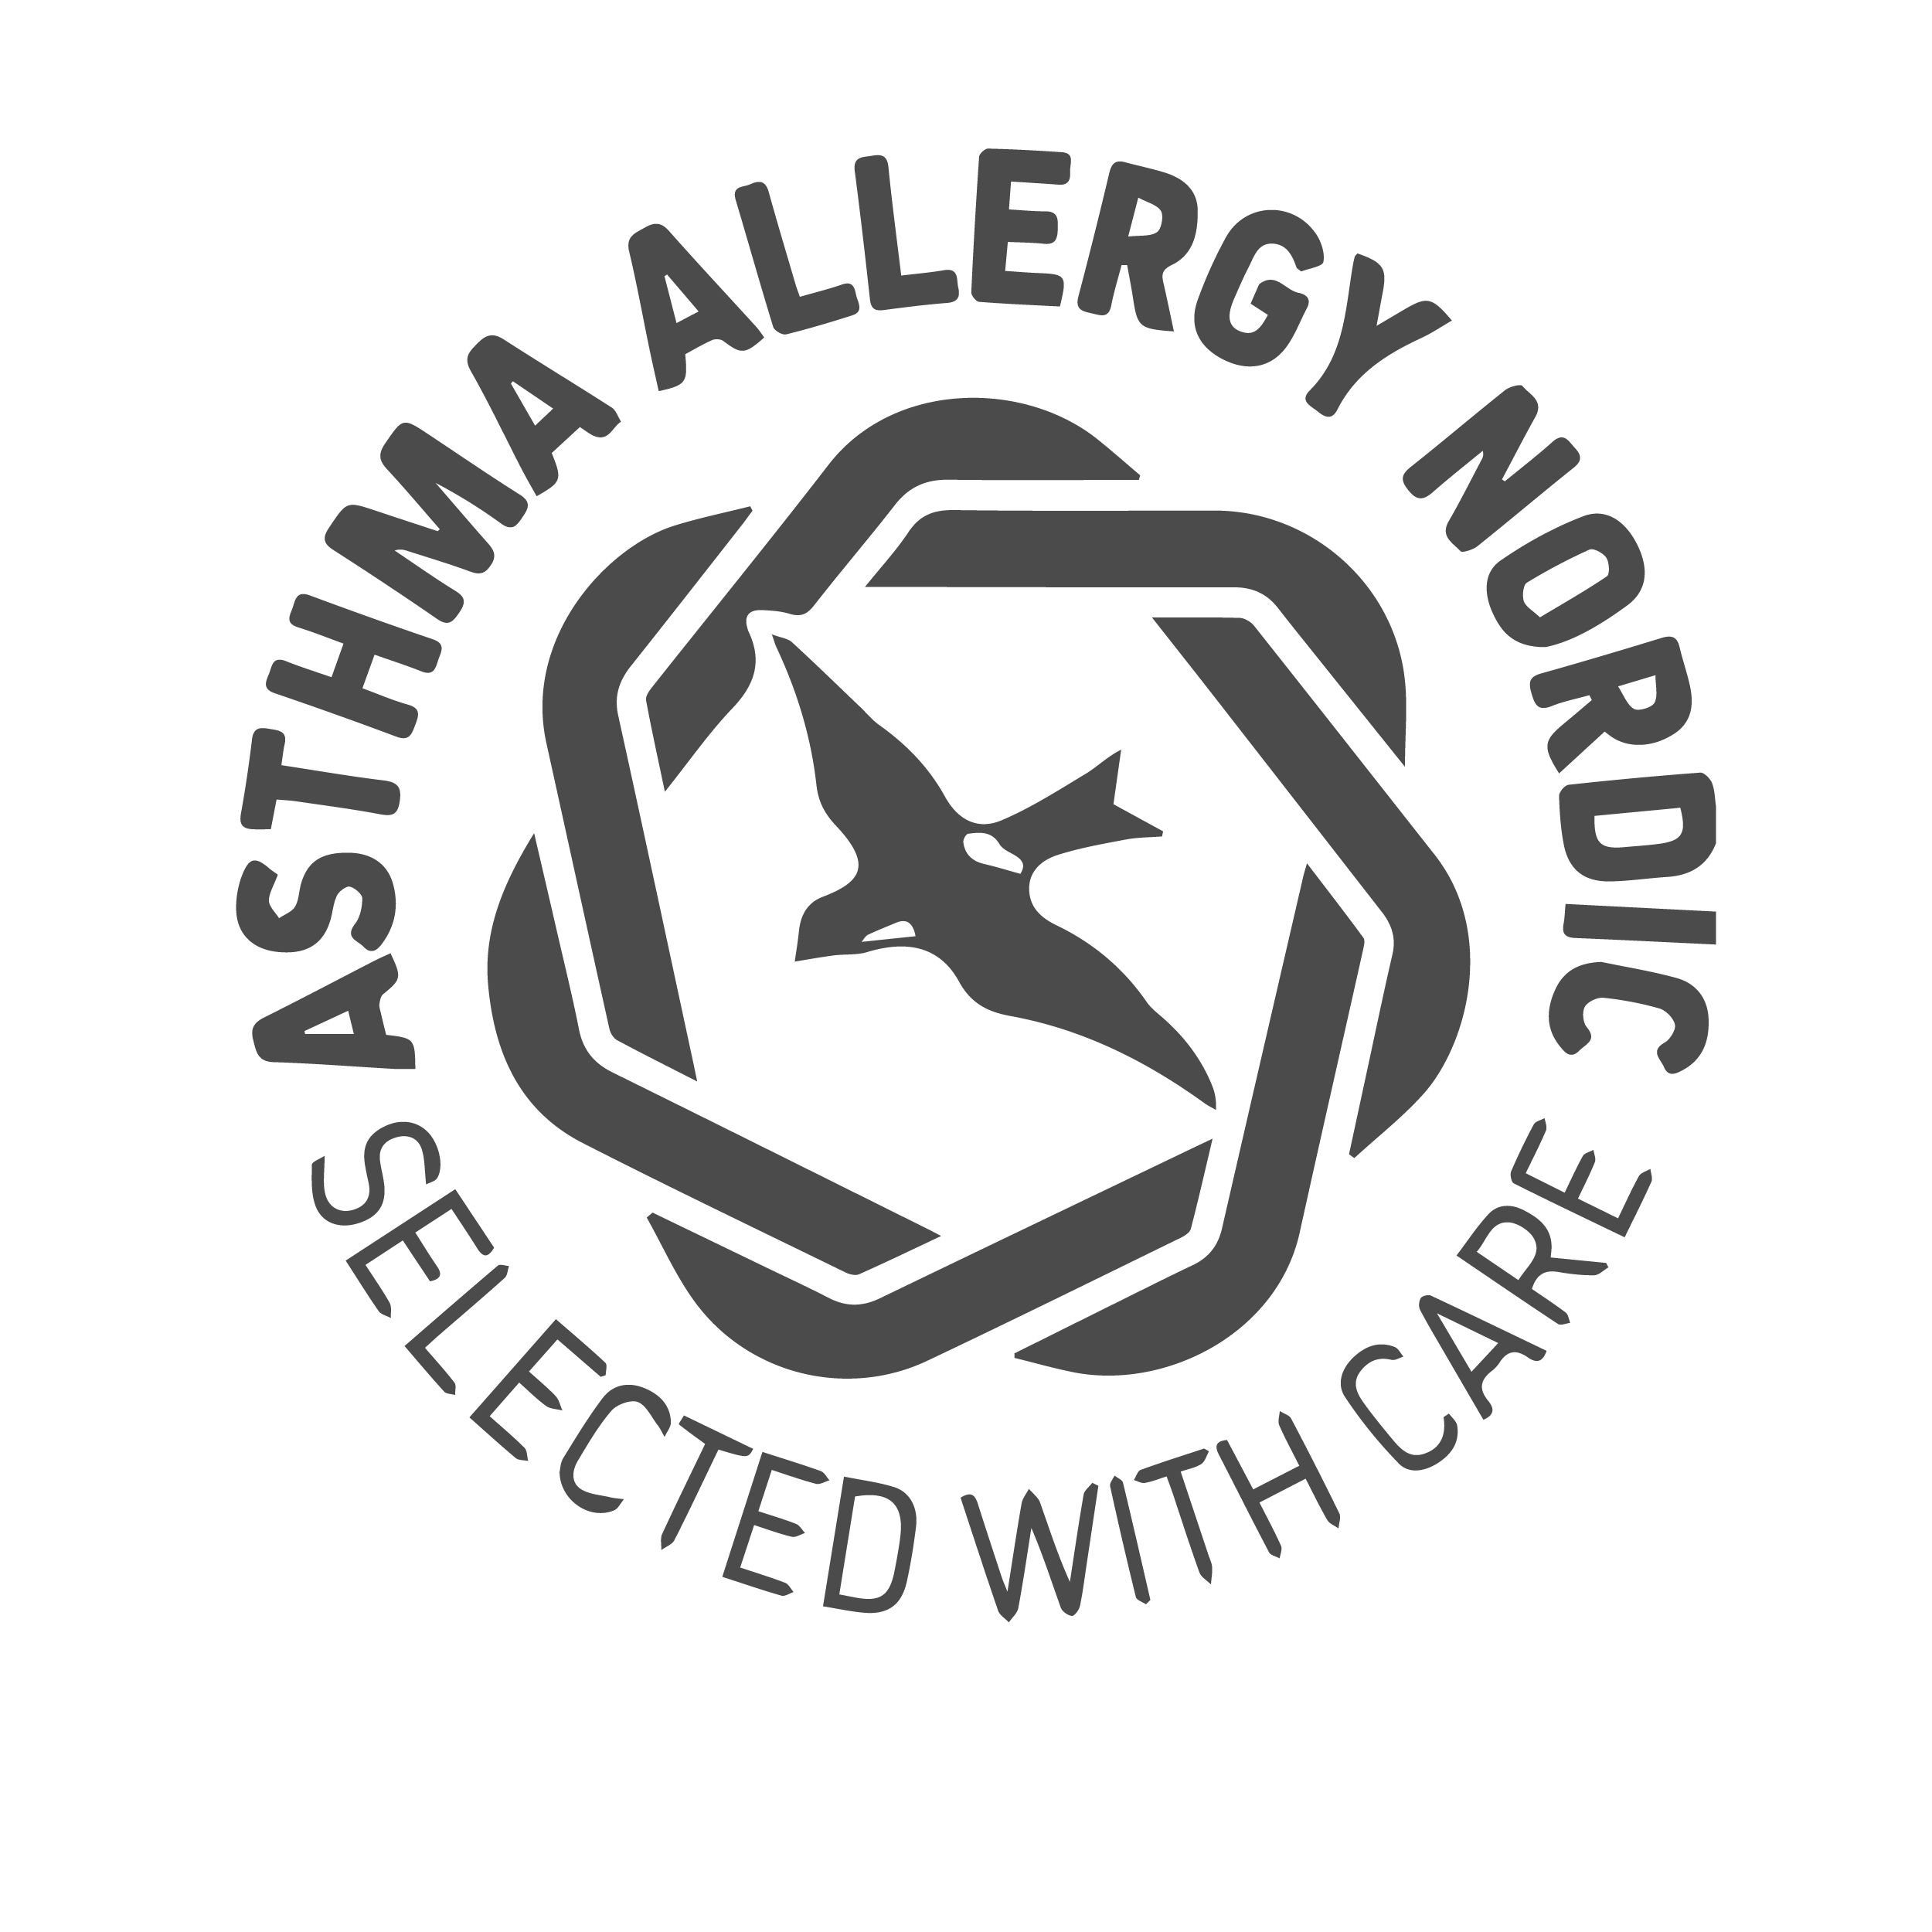 asthma nordic logo - lille kanin